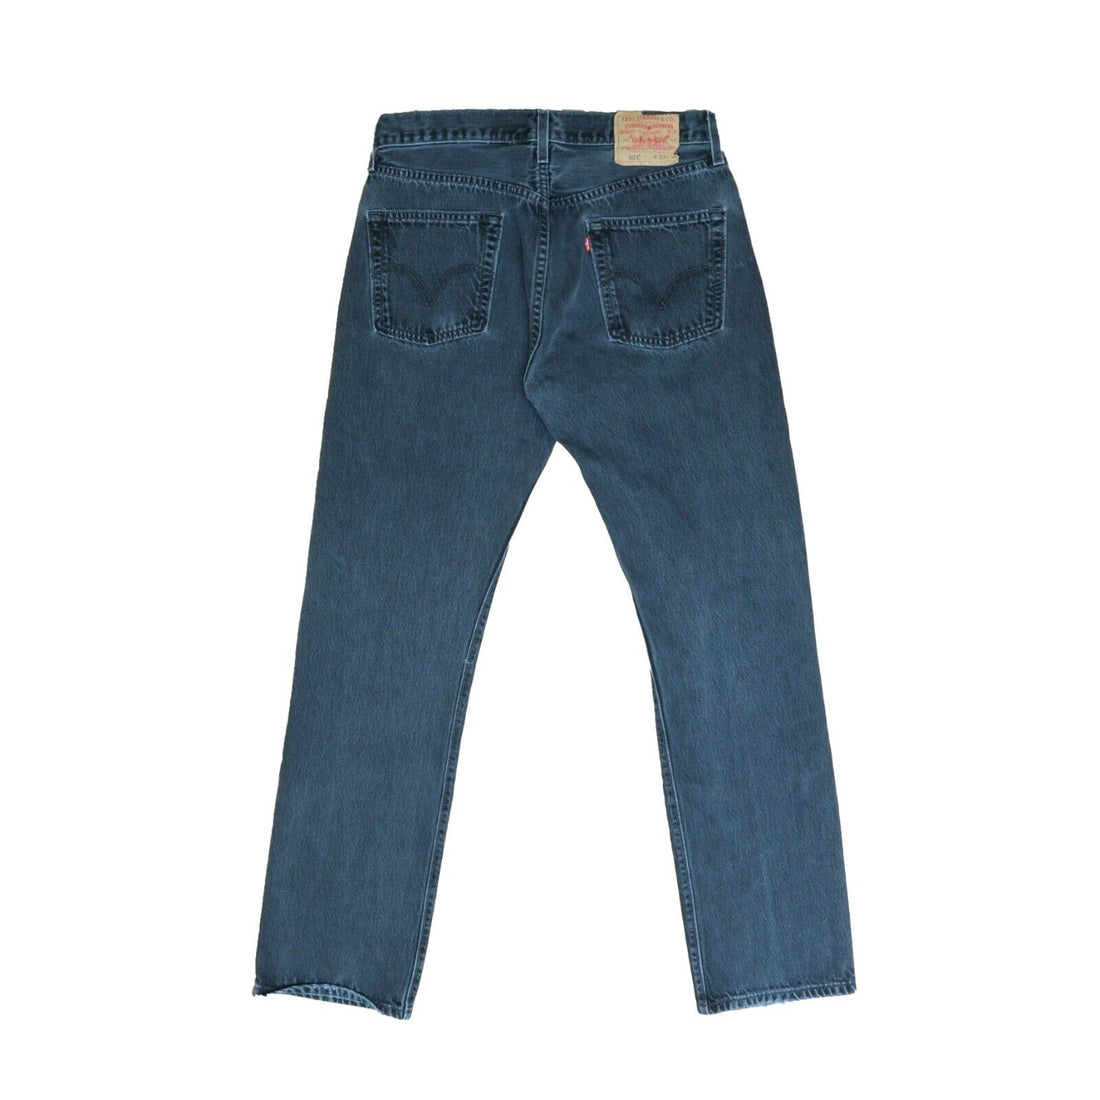 Vintage Levi Strauss & Co 501 Denim Jeans Pants Size 33W X 34L 501-0660